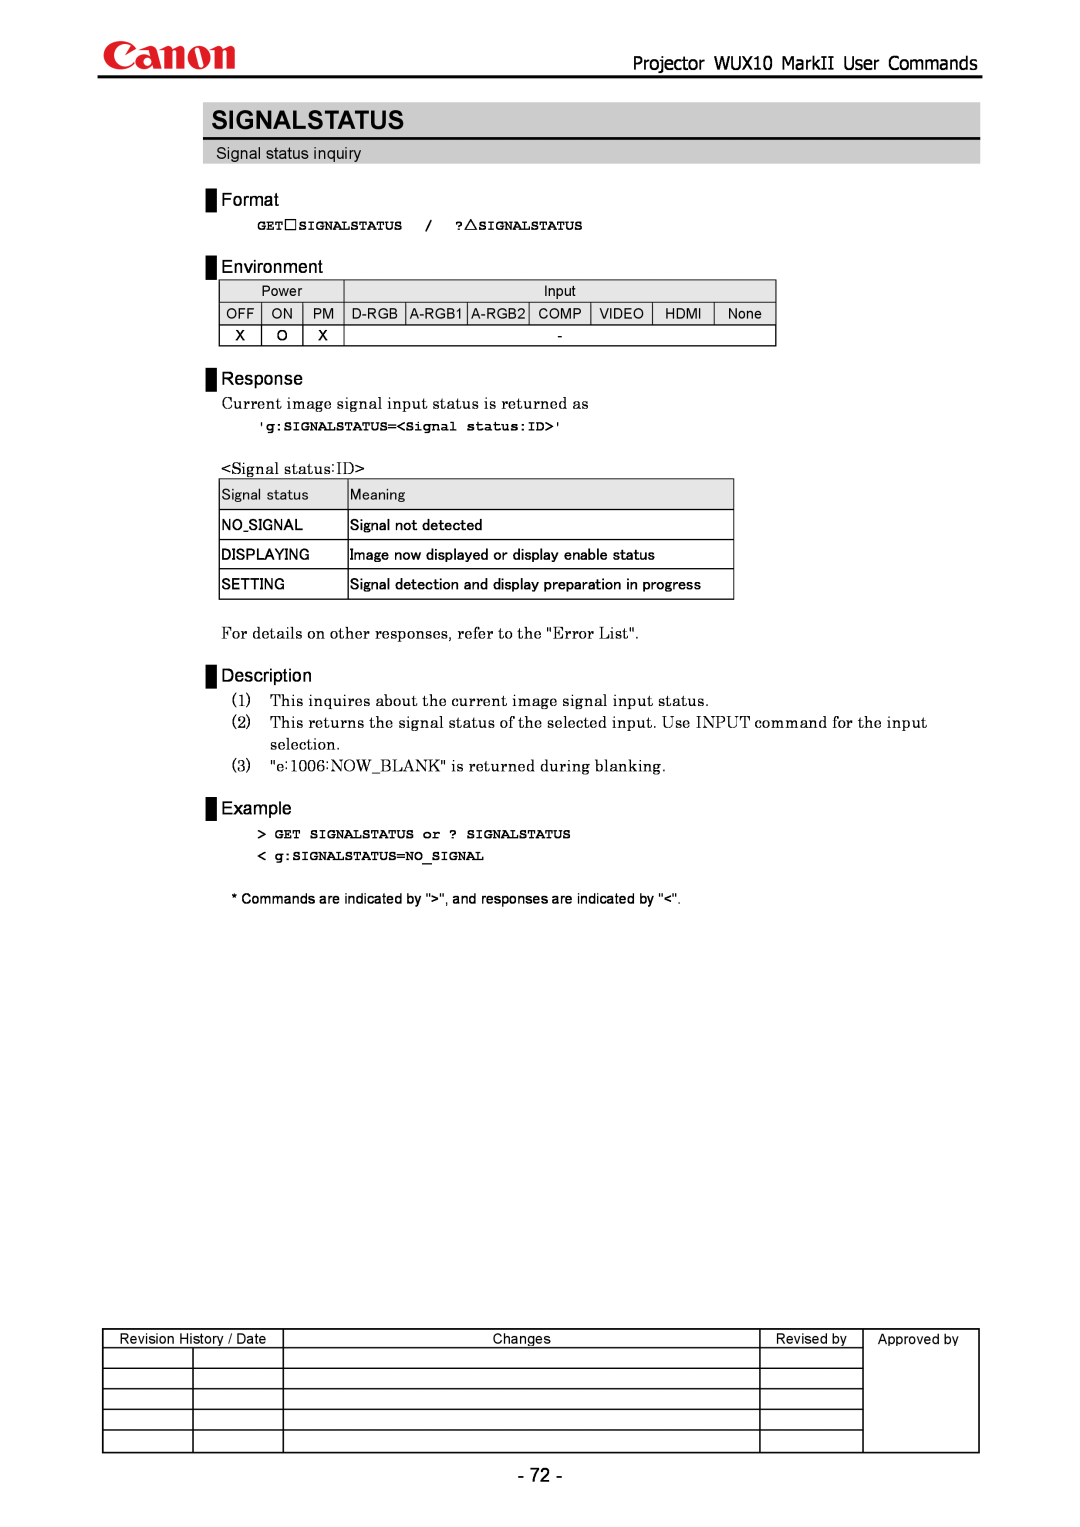 Canon manual Signalstatus, Projector WUX10 MarkII User Commands, Format, Environment, Response, Description, Example 